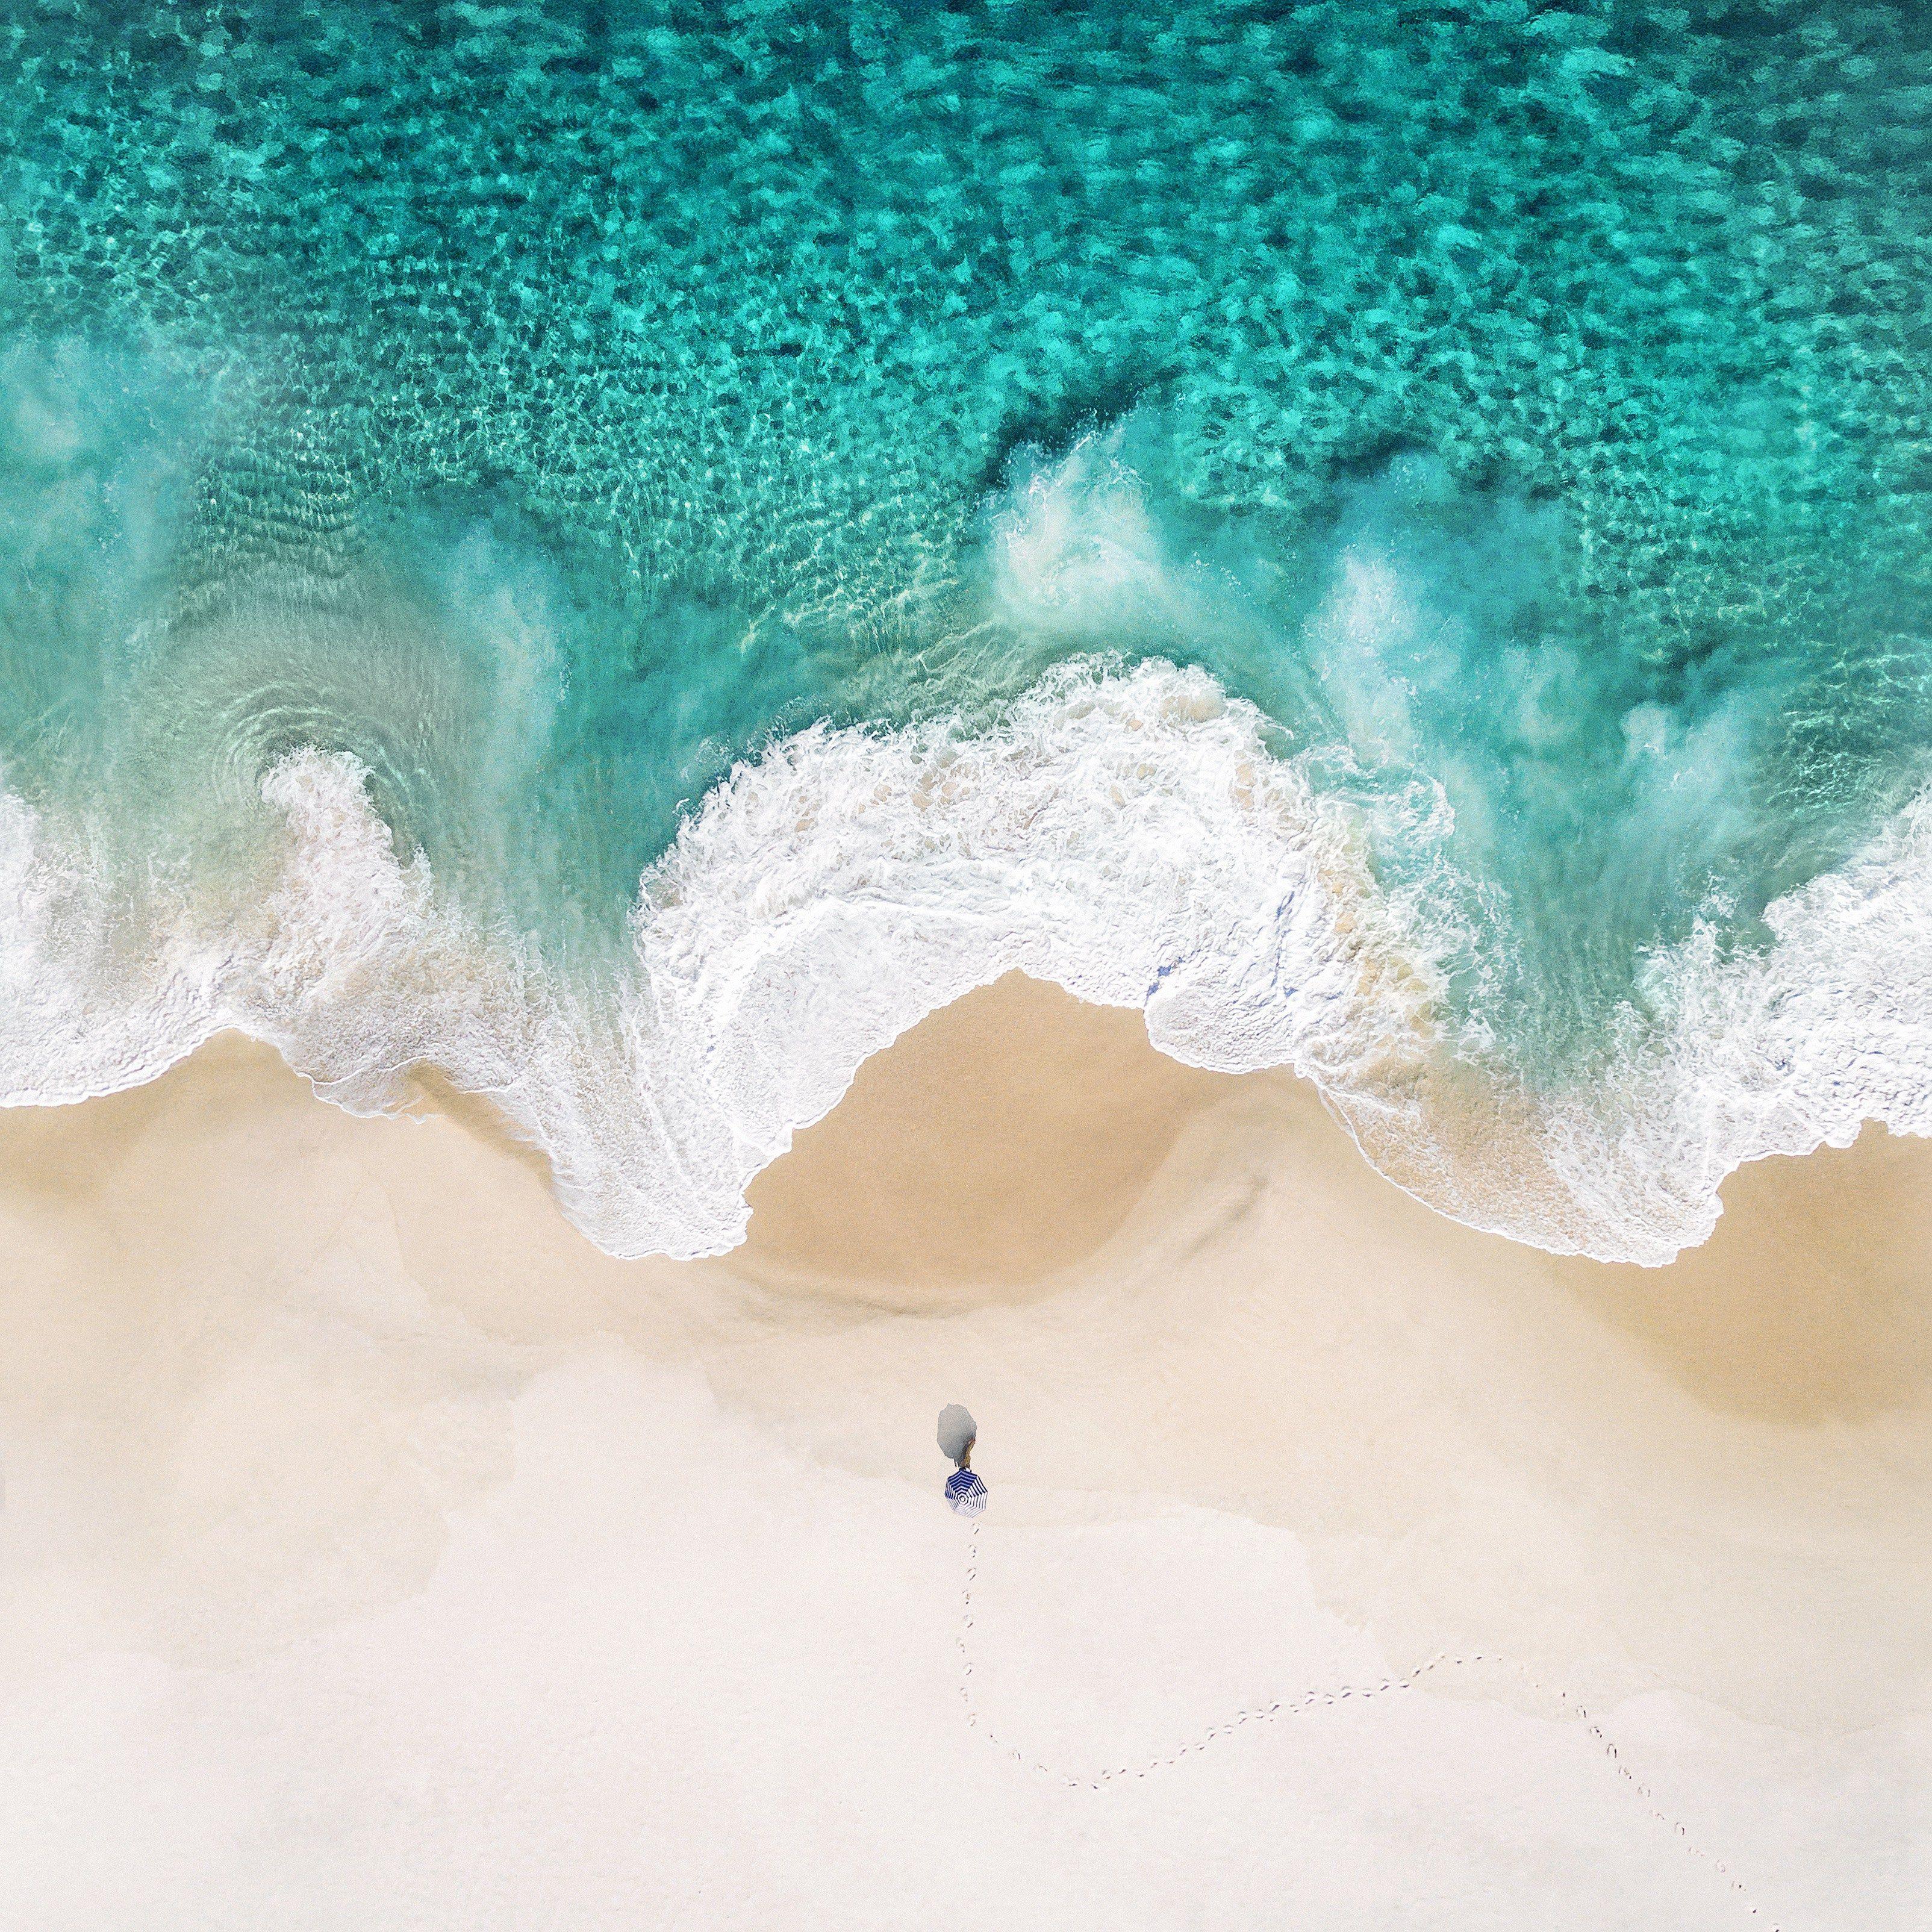 Wallpaper iOS 11 4k 5k beach ocean OS 13655